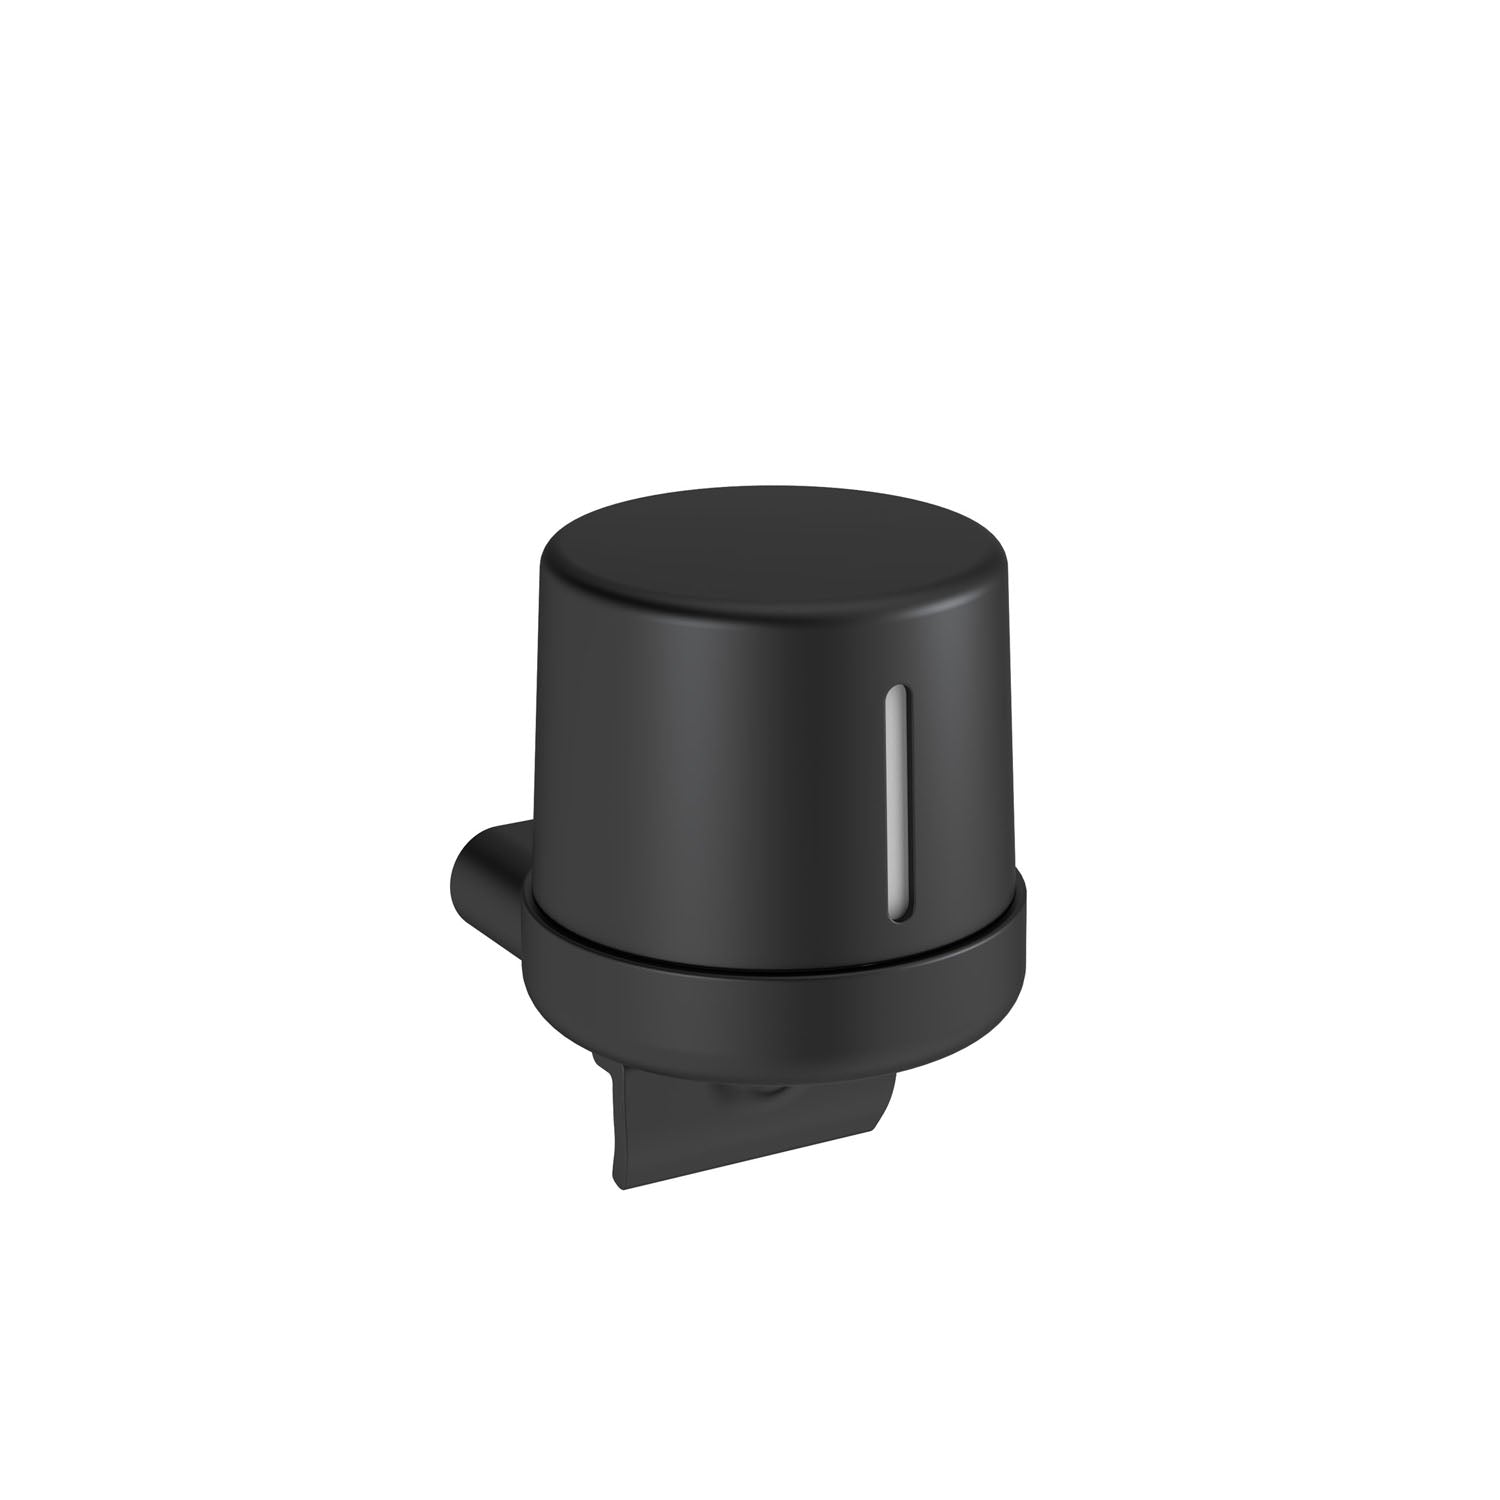 Architect SP soap dispenser matte black (2353603)